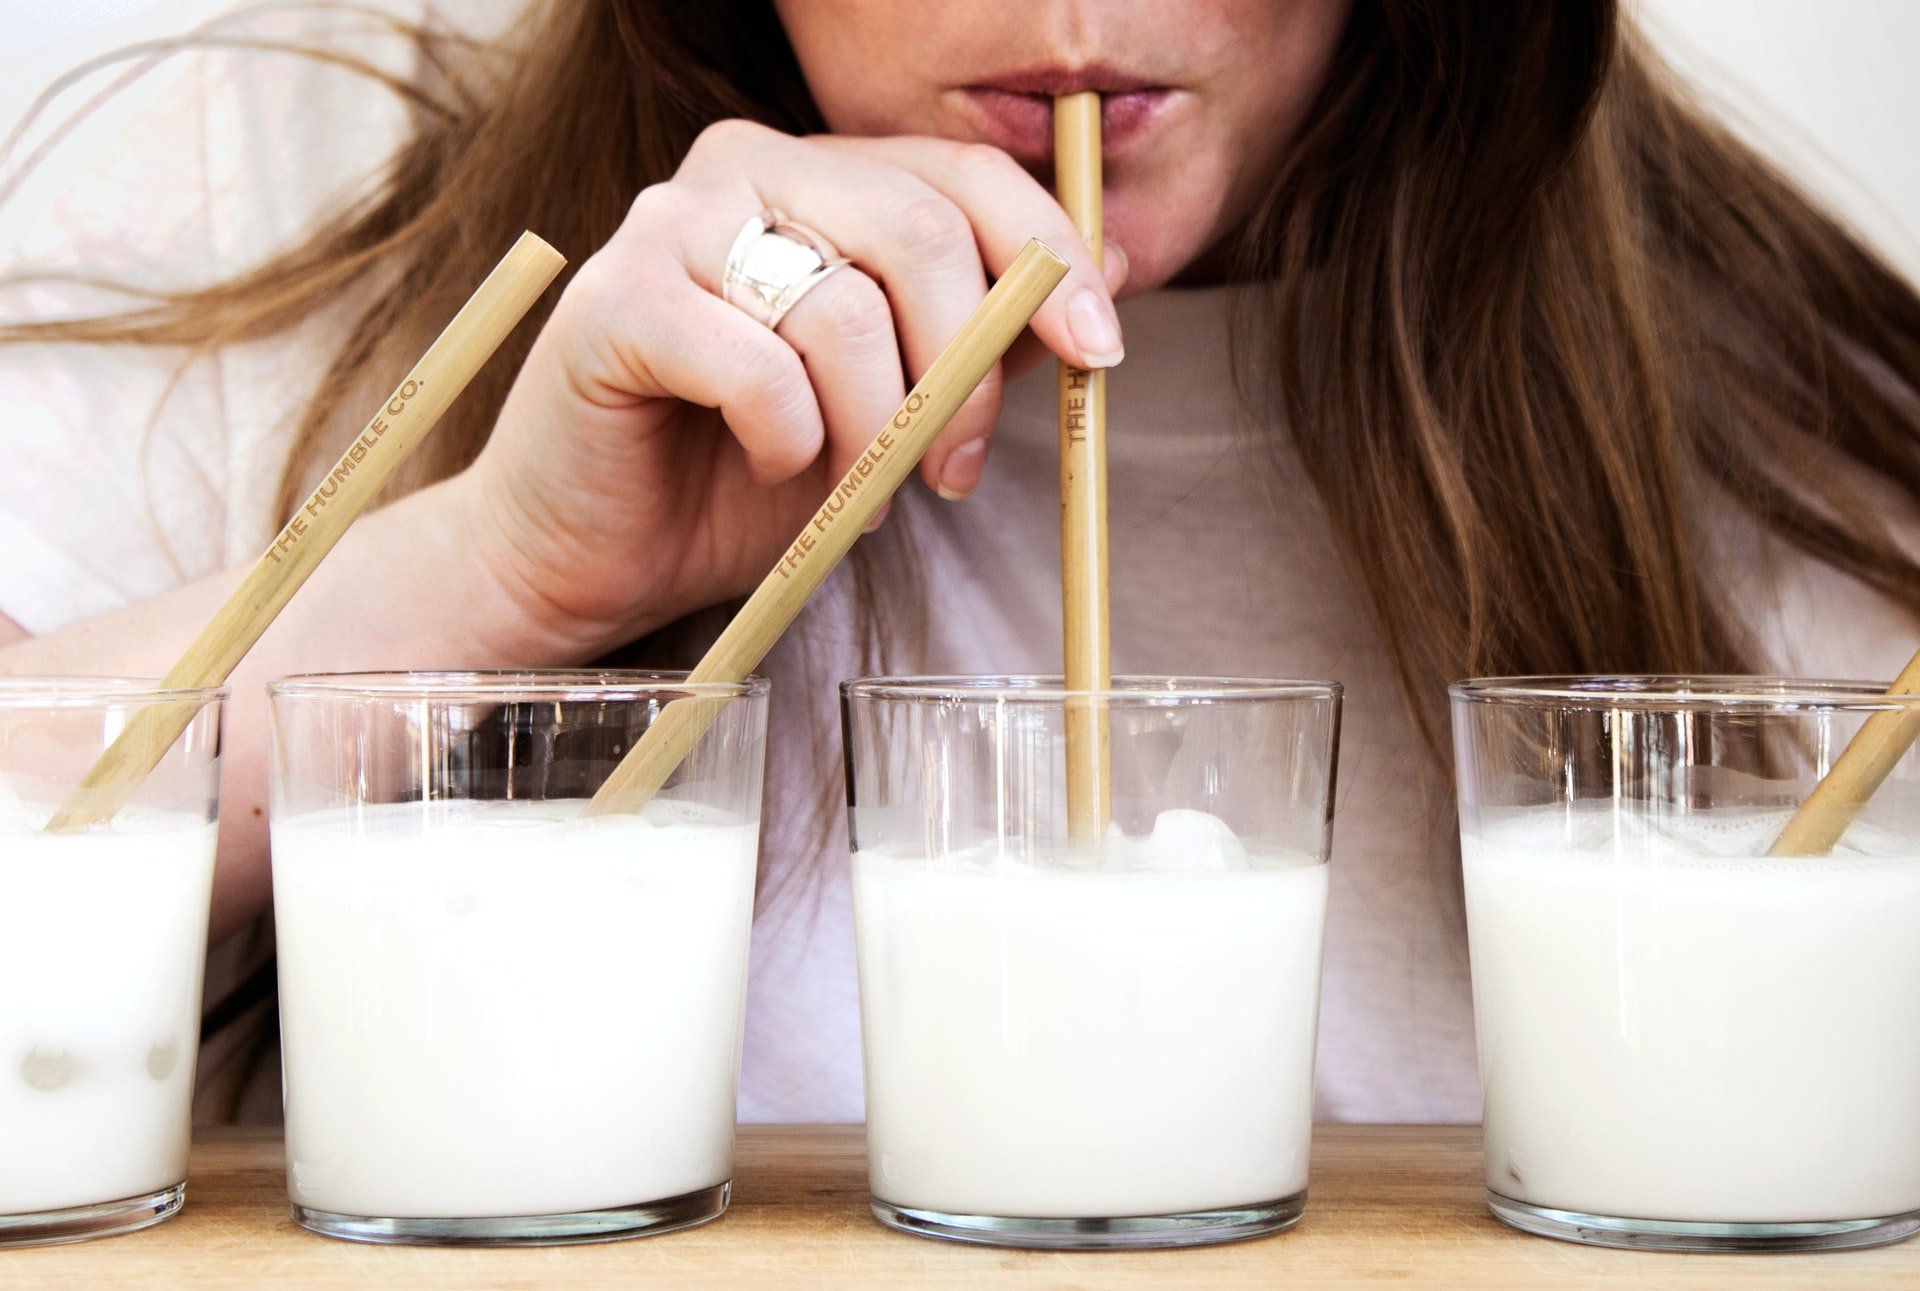 Dairy Milk Alternatives Could Be As Unhealthy As Soda